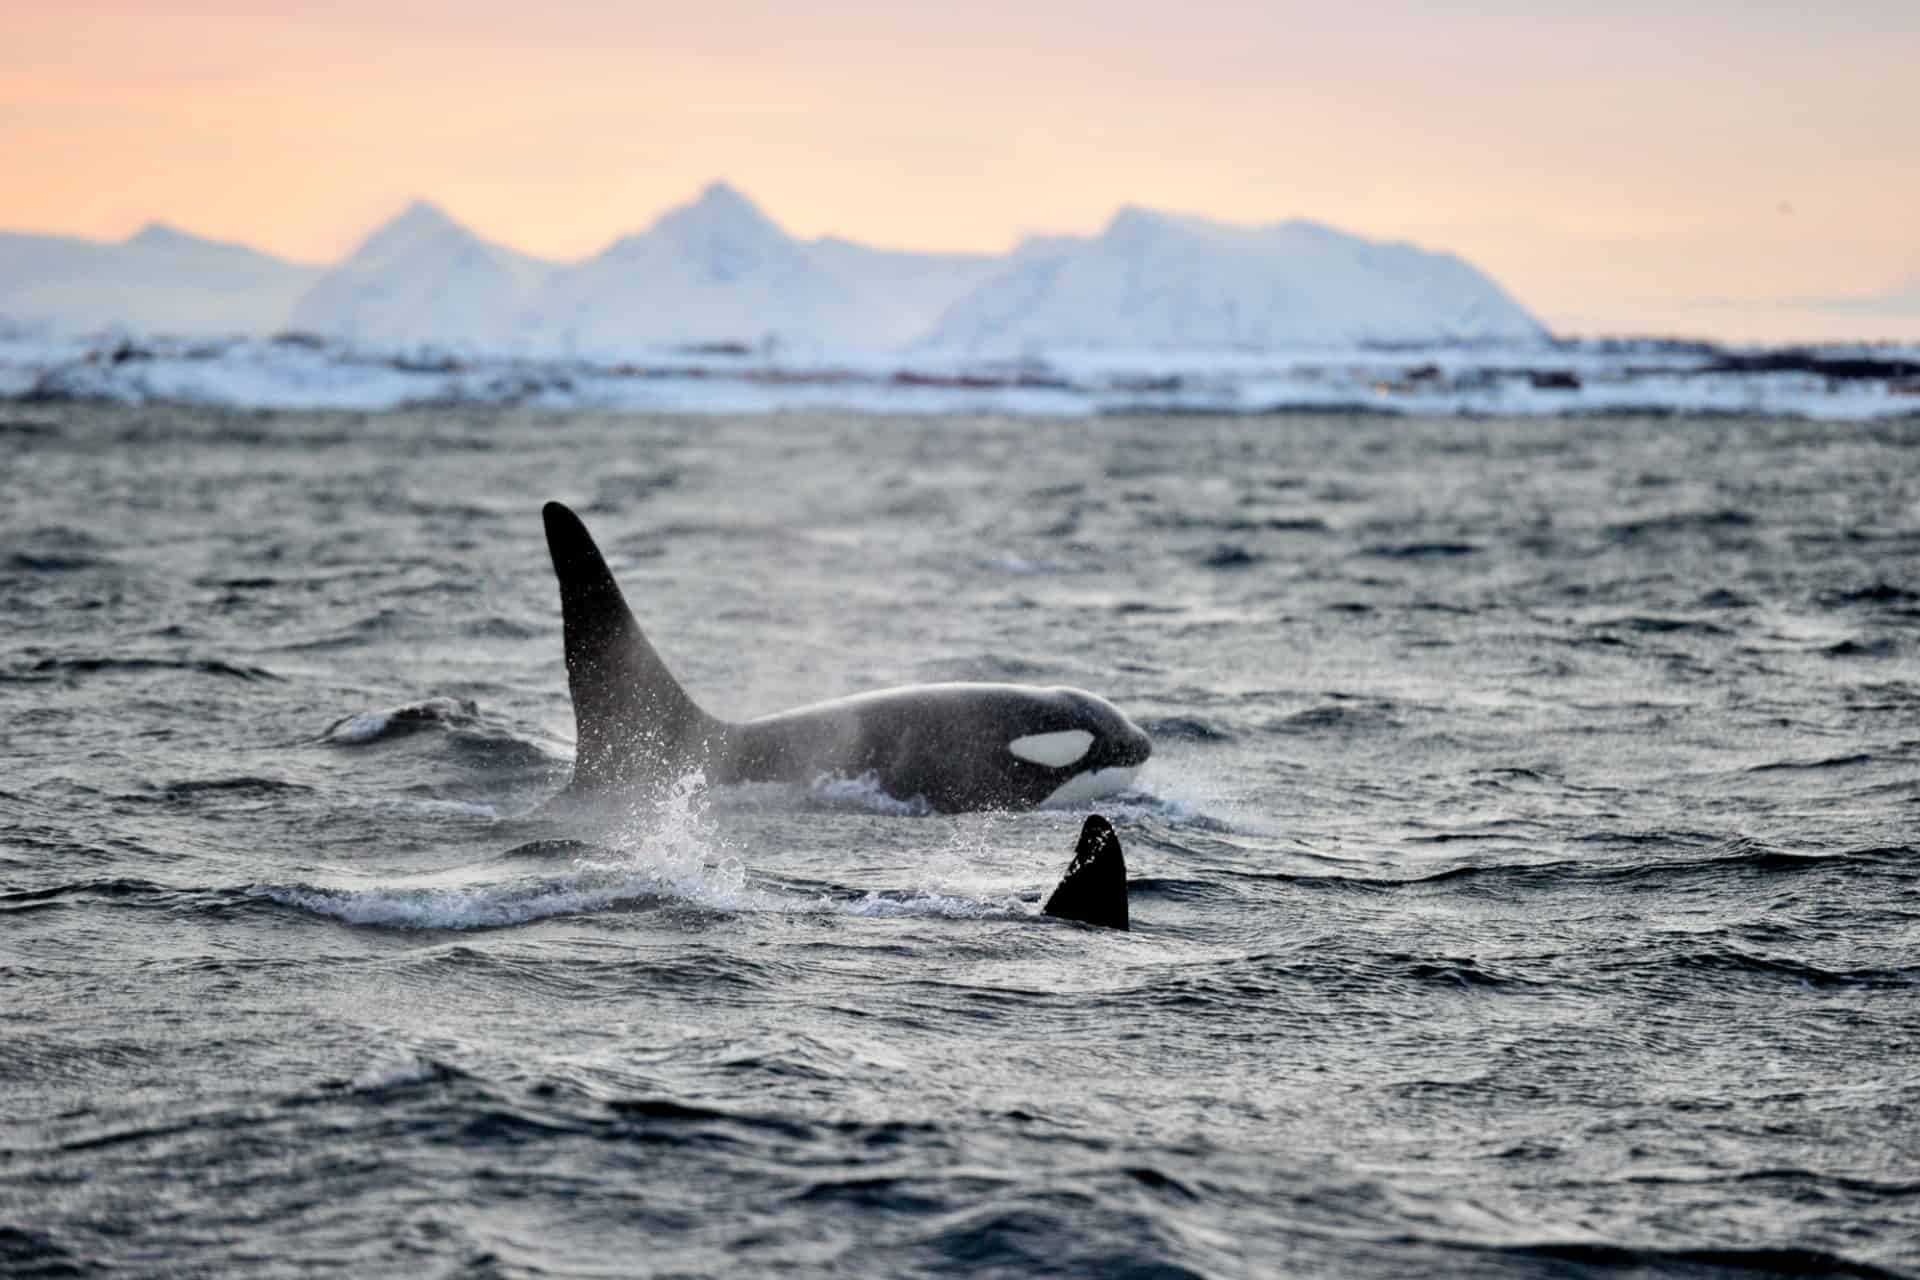 reussir ses photos de baleines en norvege